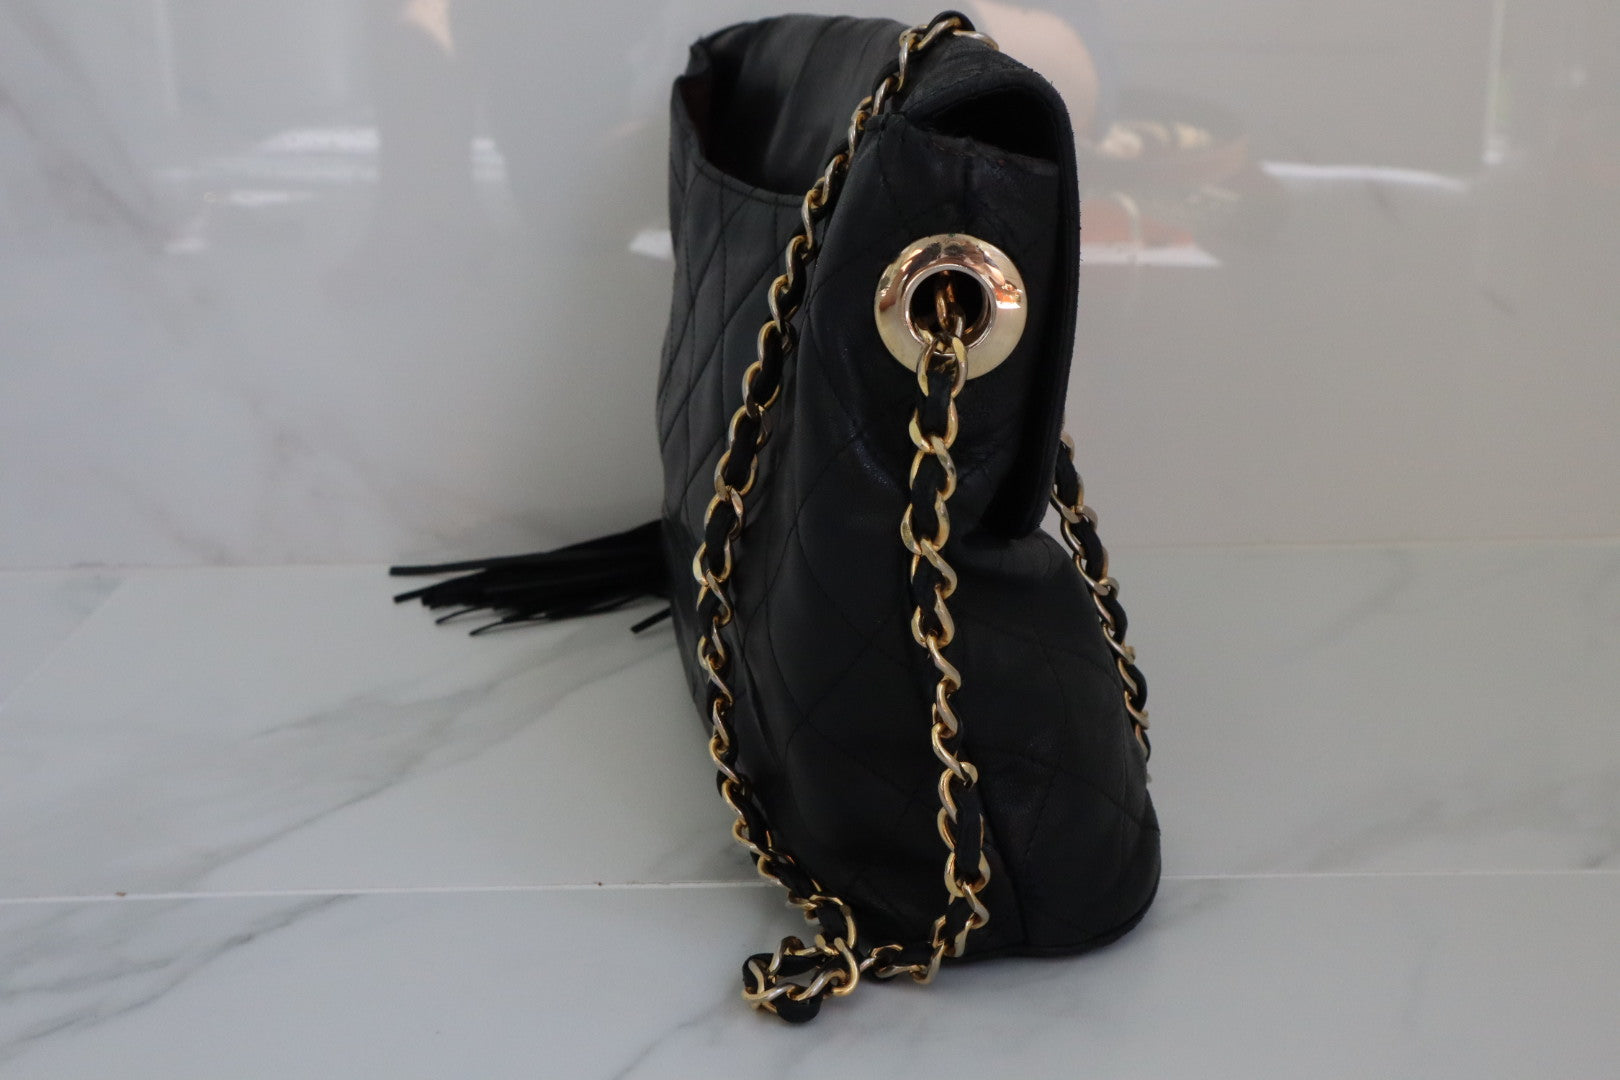 Chanel Large Classic Quilted Caviar Handbag Black/Burgundy